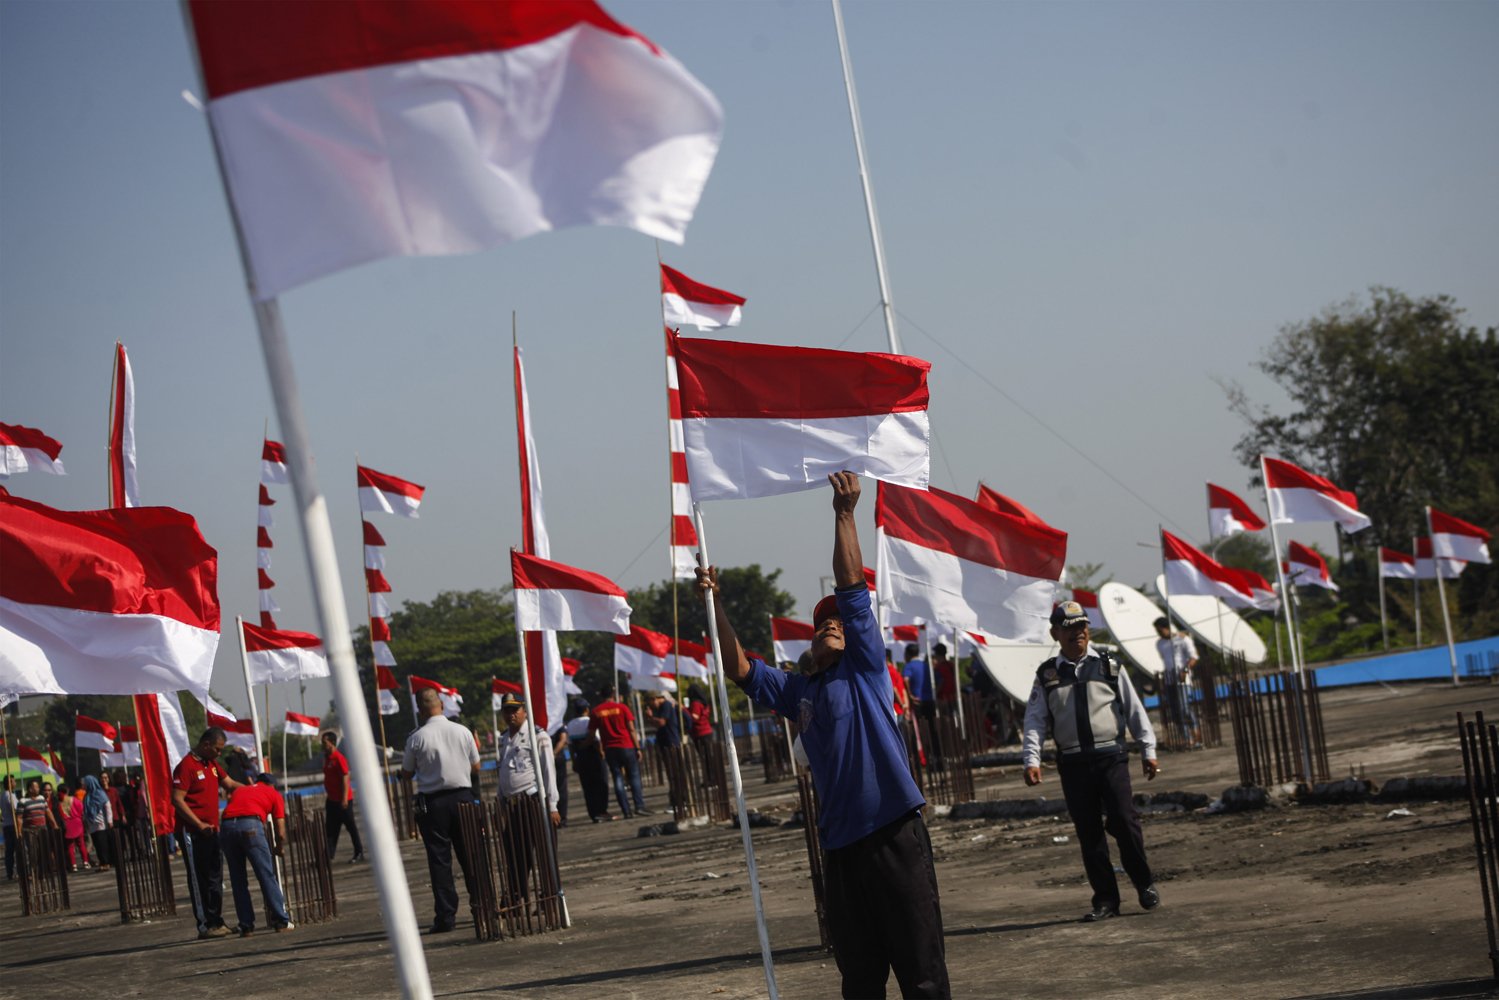 Pengelola Terminal Tipe A Tirtonadi Solo, Jawa Tengah memasang 600 bendera merah putih di kawasan terminal setempat, Solo, Jawa Tengah, Selasa (3/8/2019). Pemasangan bendera tersebut merupakan bagian dari upaya pengelola terminal menyambut HUT ke-74 RI pada 17 Agustus 2019 mendatang. 